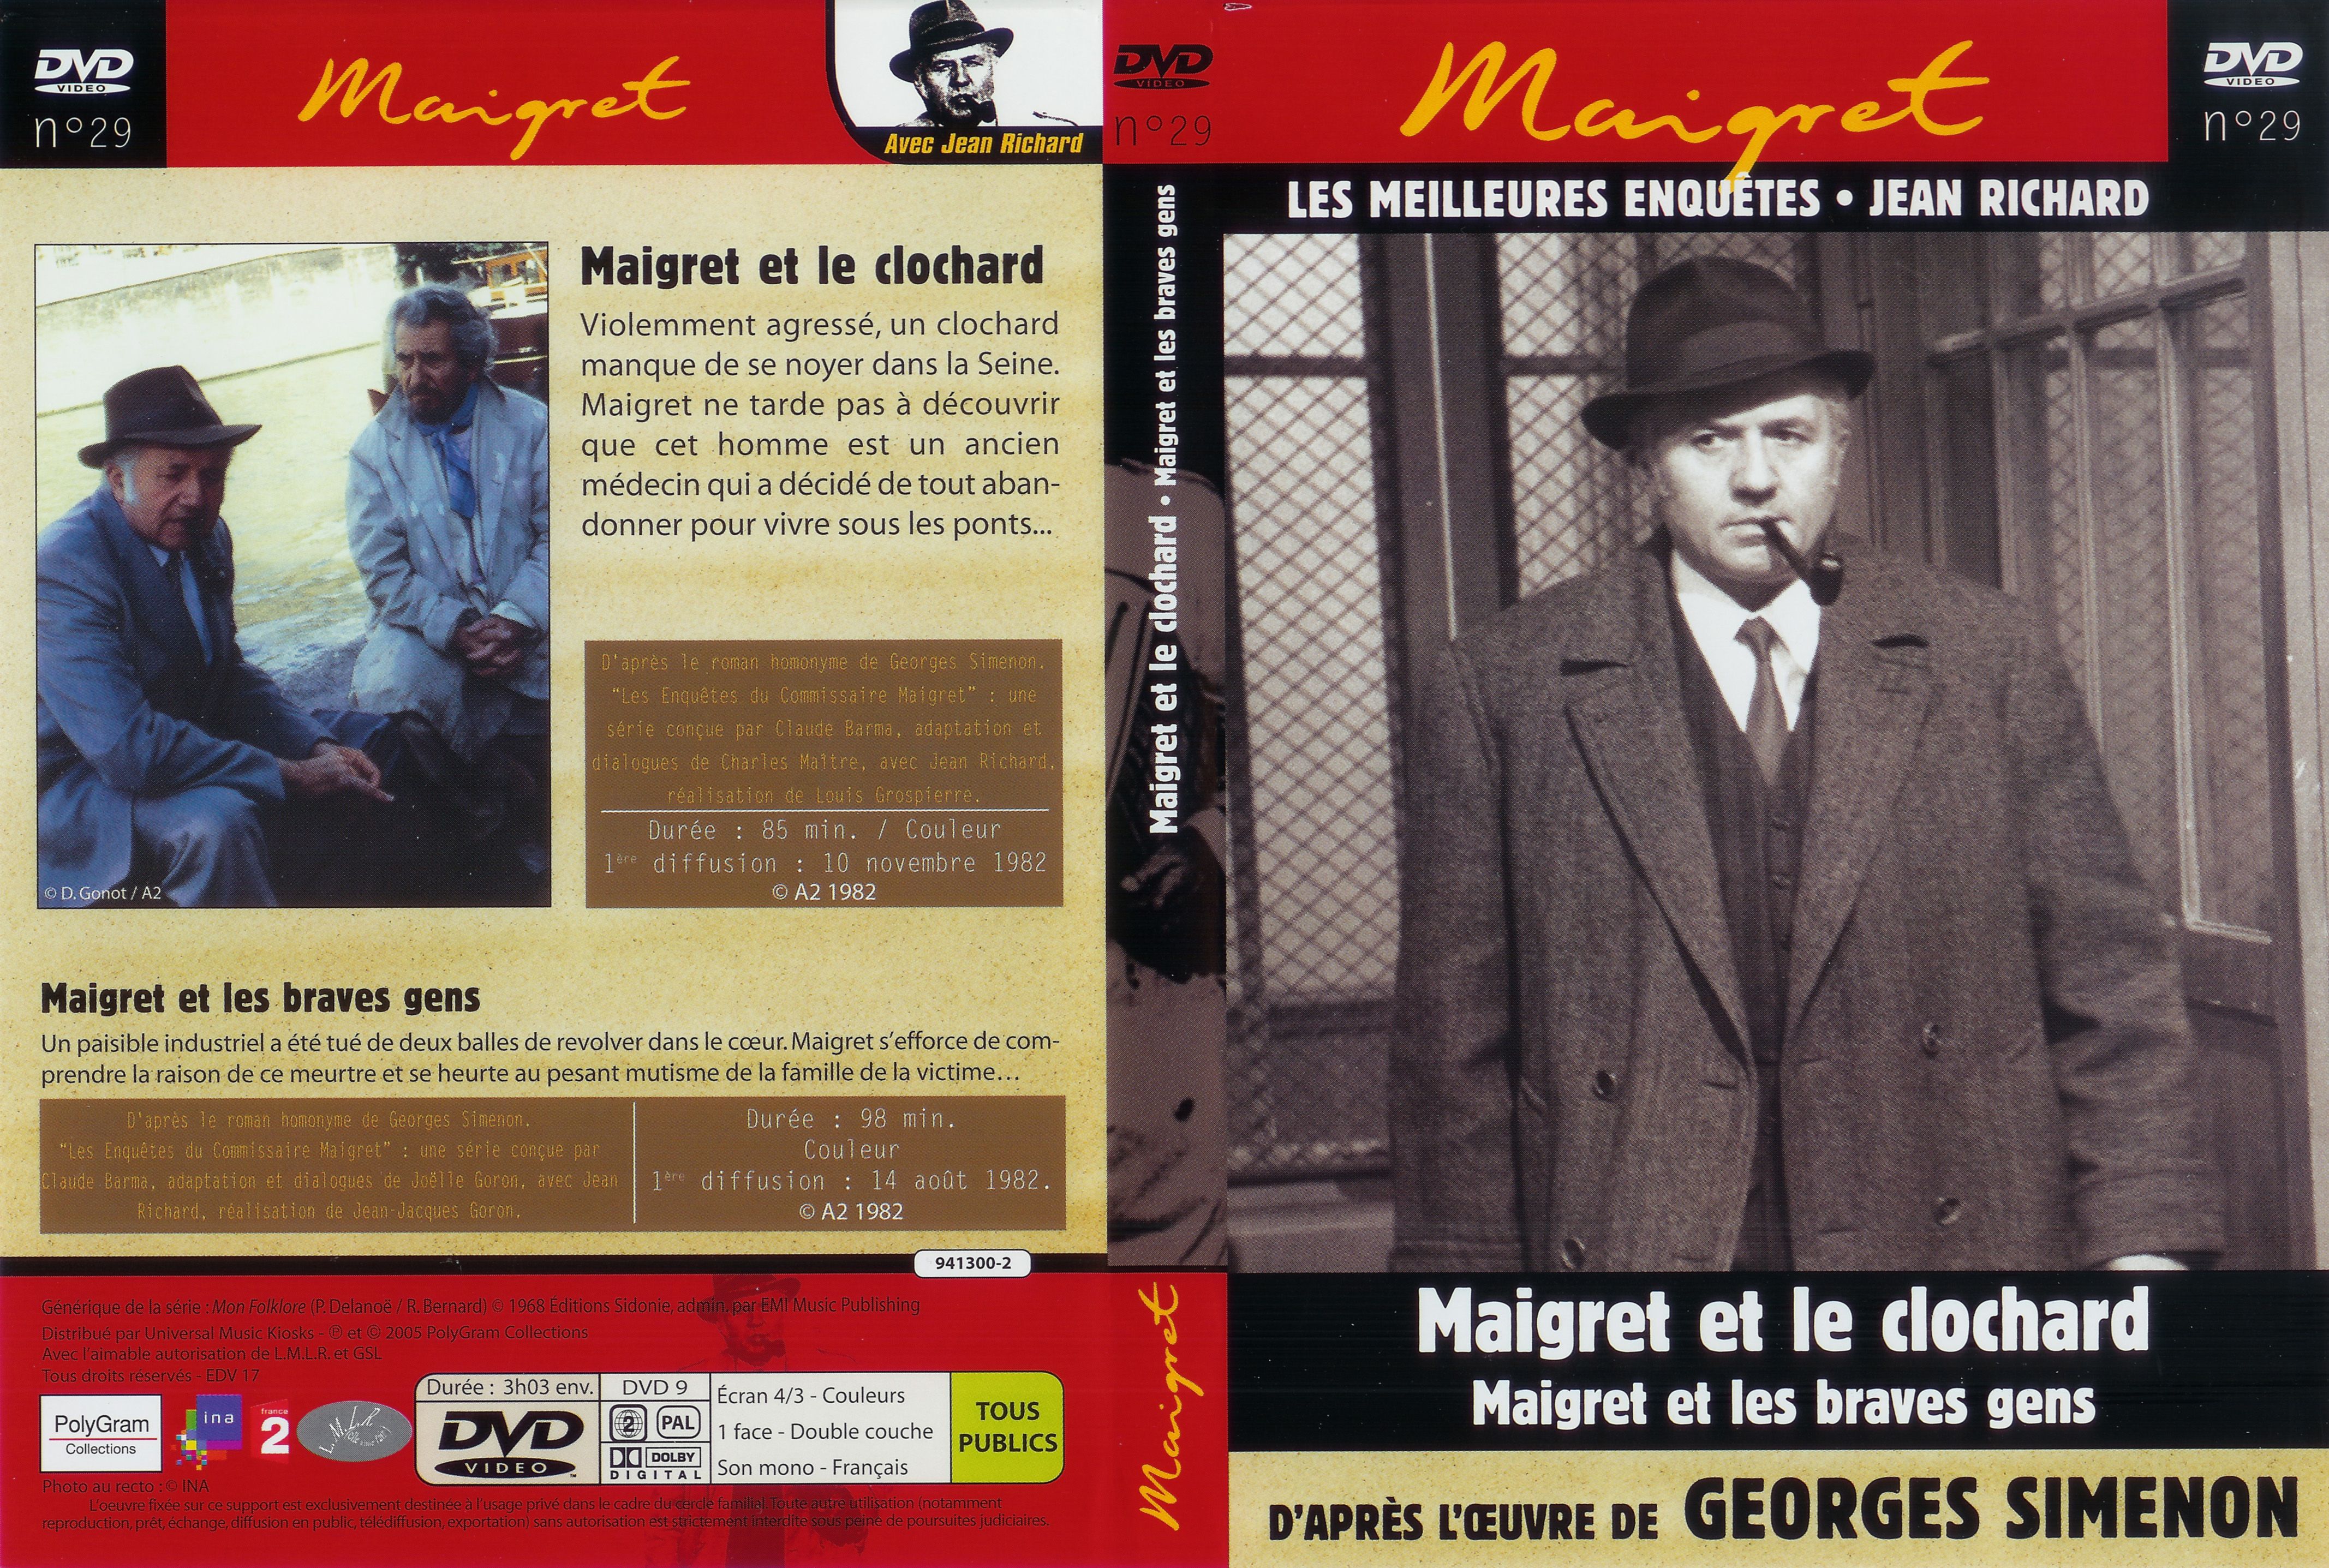 Jaquette DVD Maigret (Jean Richard) vol 29